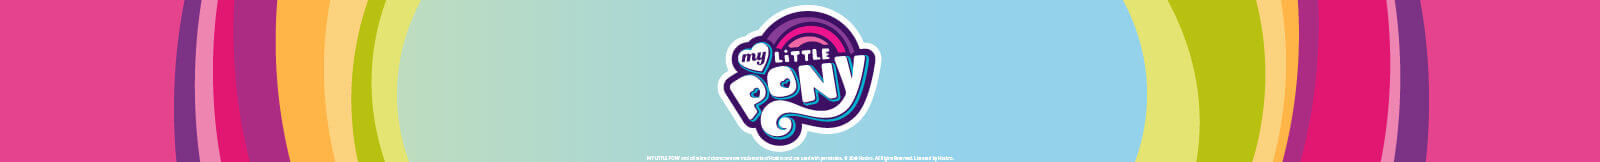 My Little Pony - mlp - My Little Pony stuffed animal